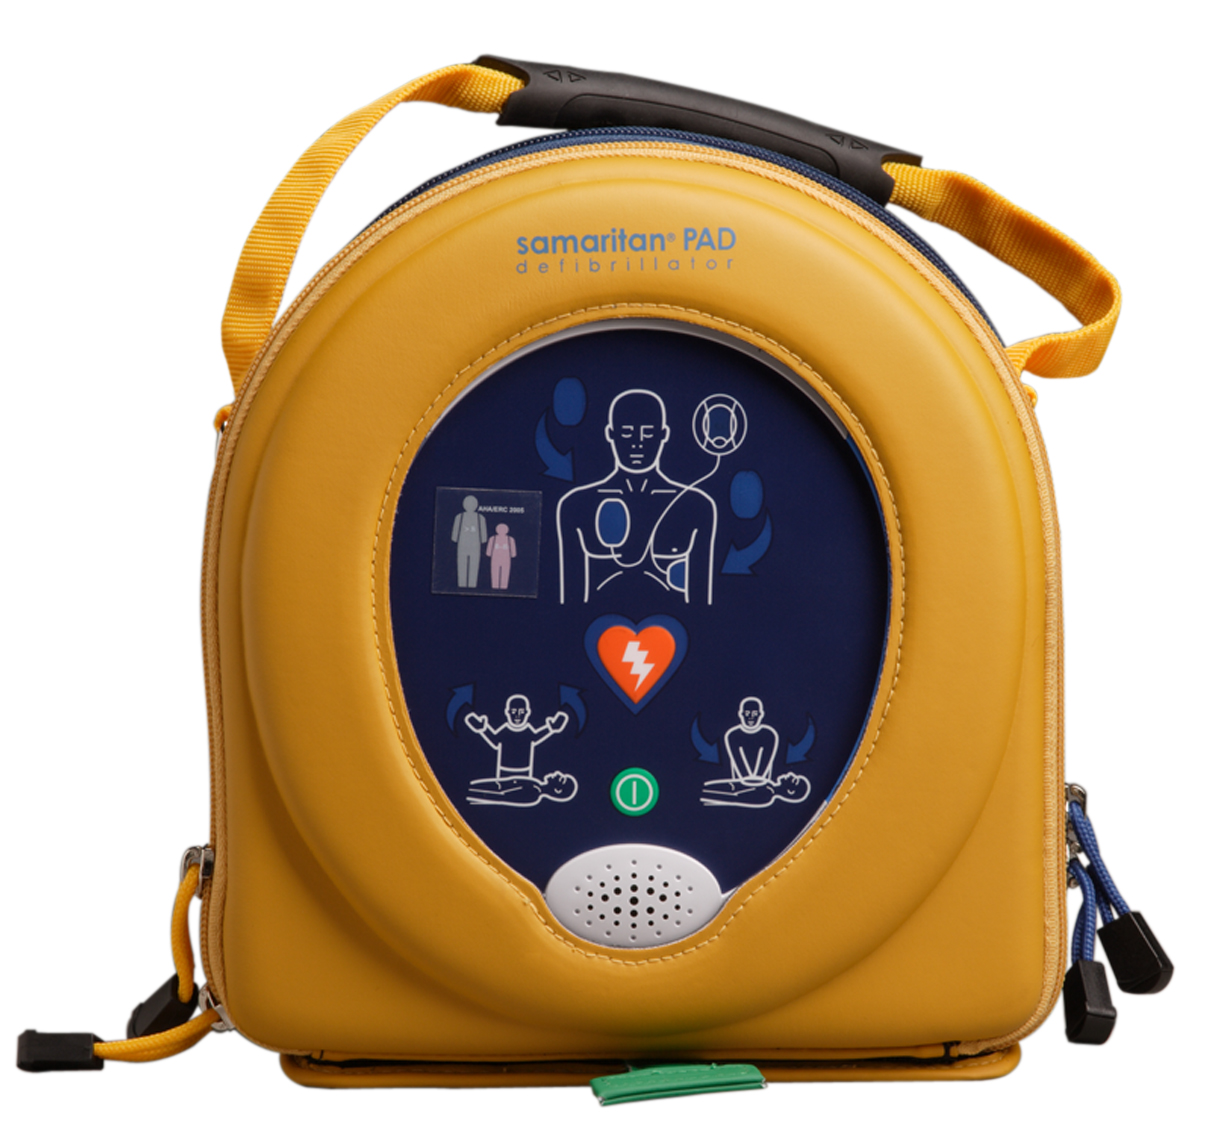 Heartsine Defibrillator